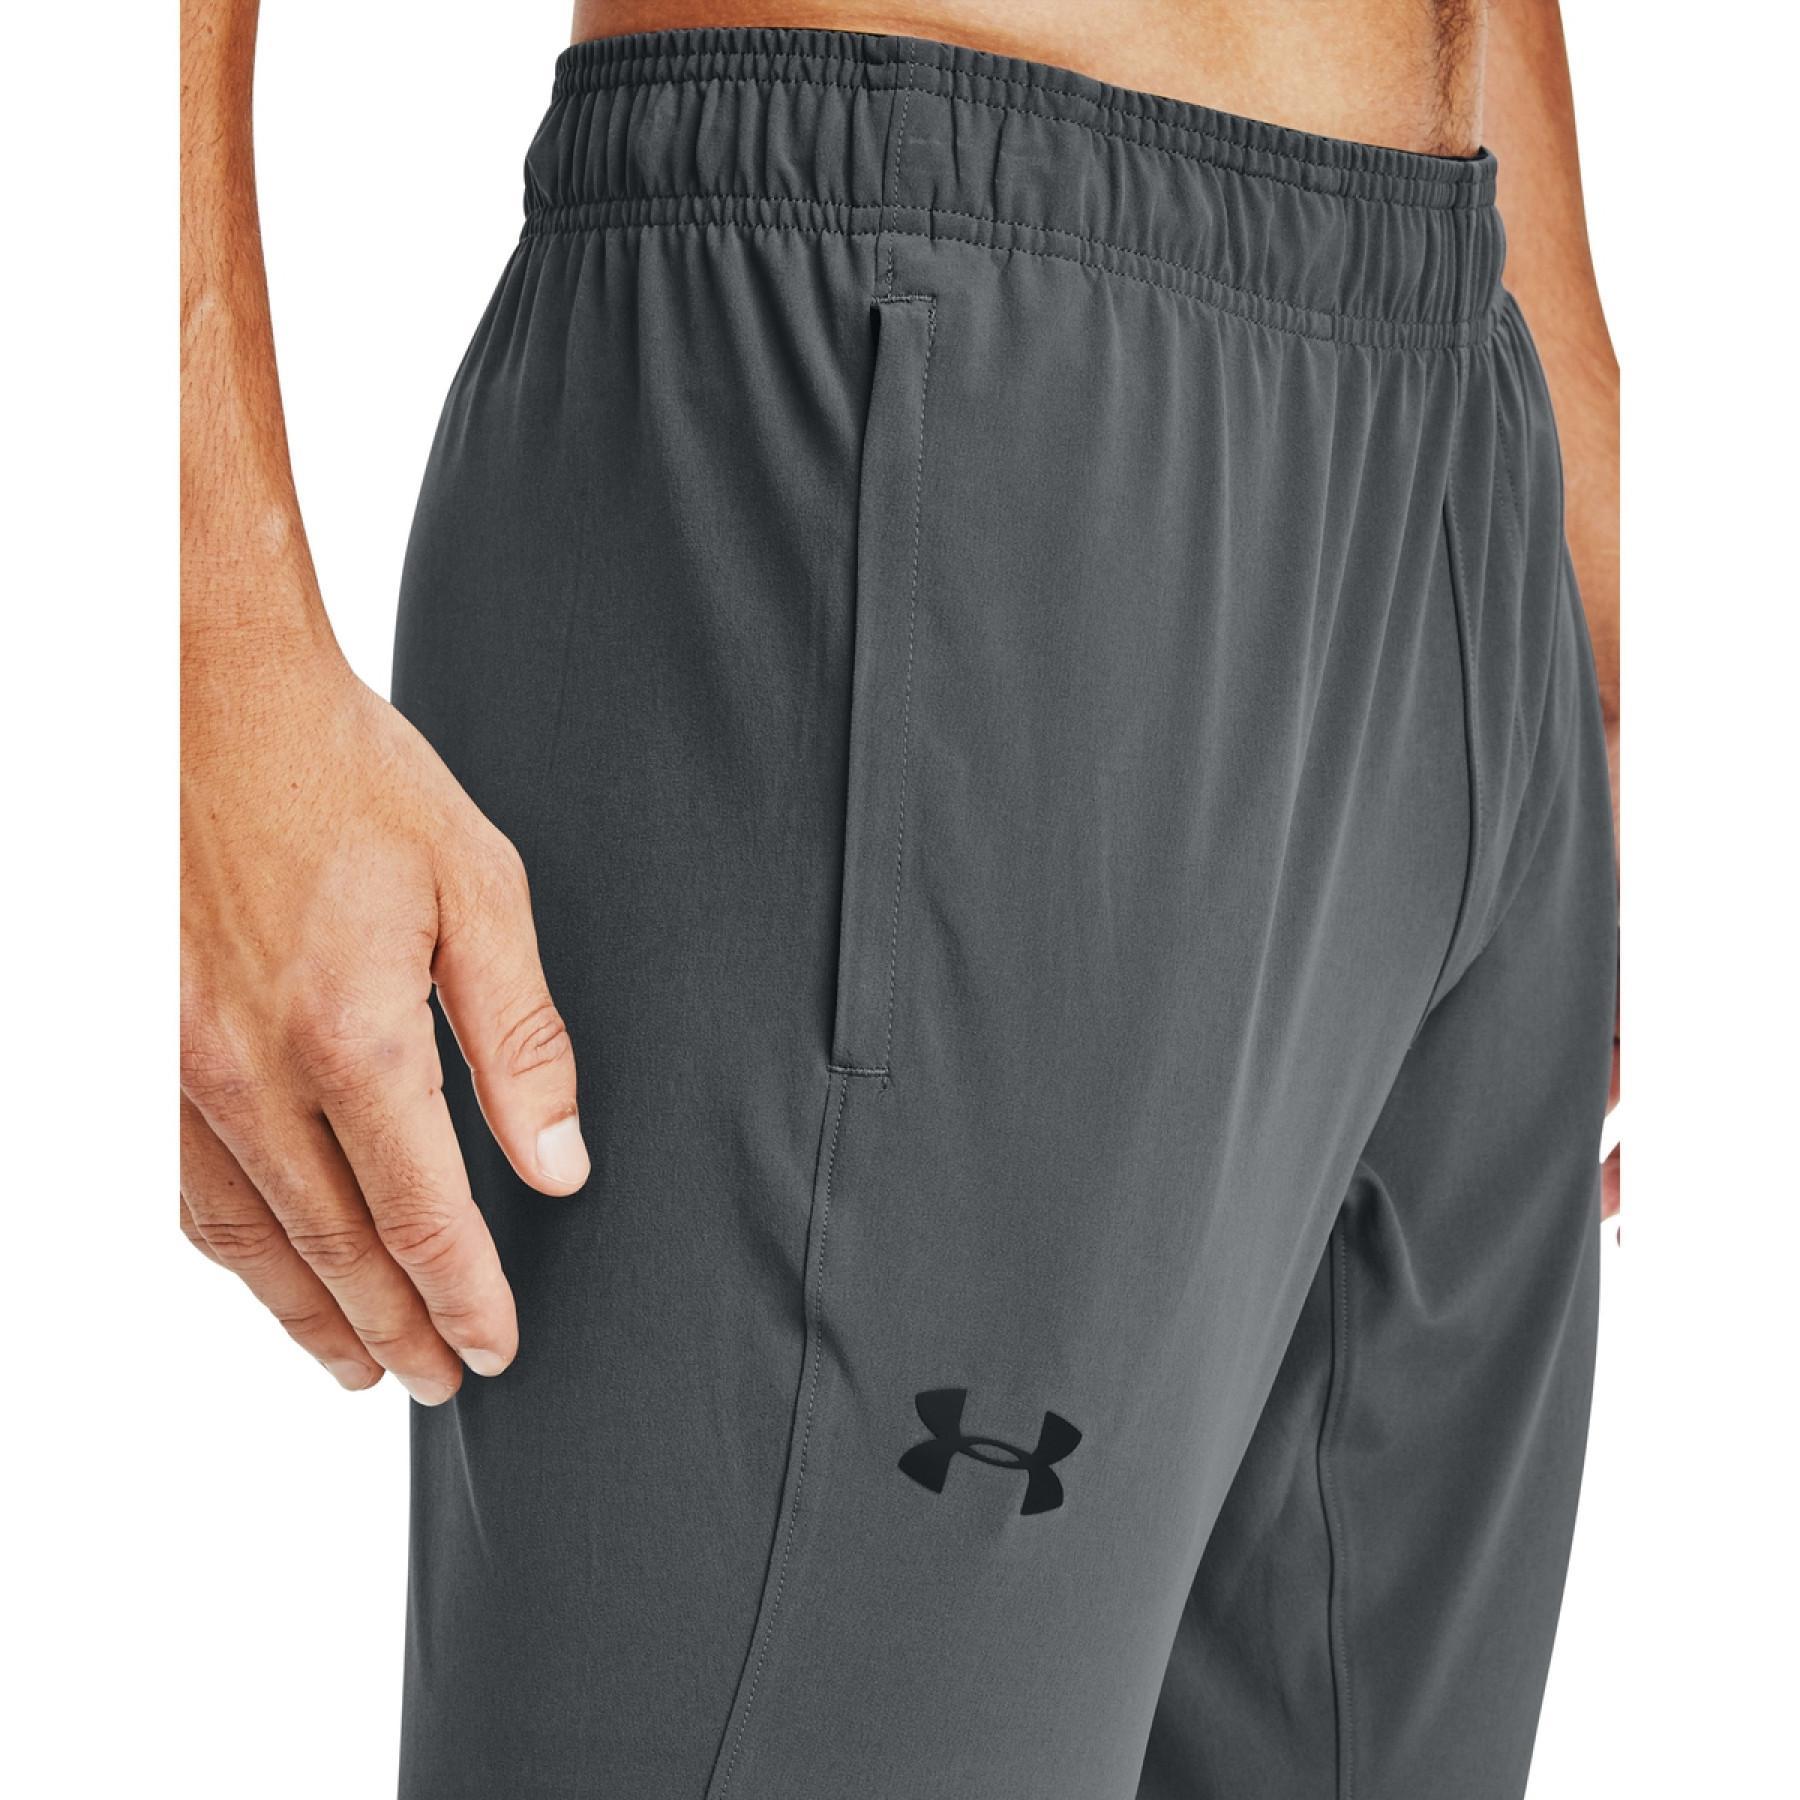 Pants Under Armour Hybrid - Textile - Handball wear